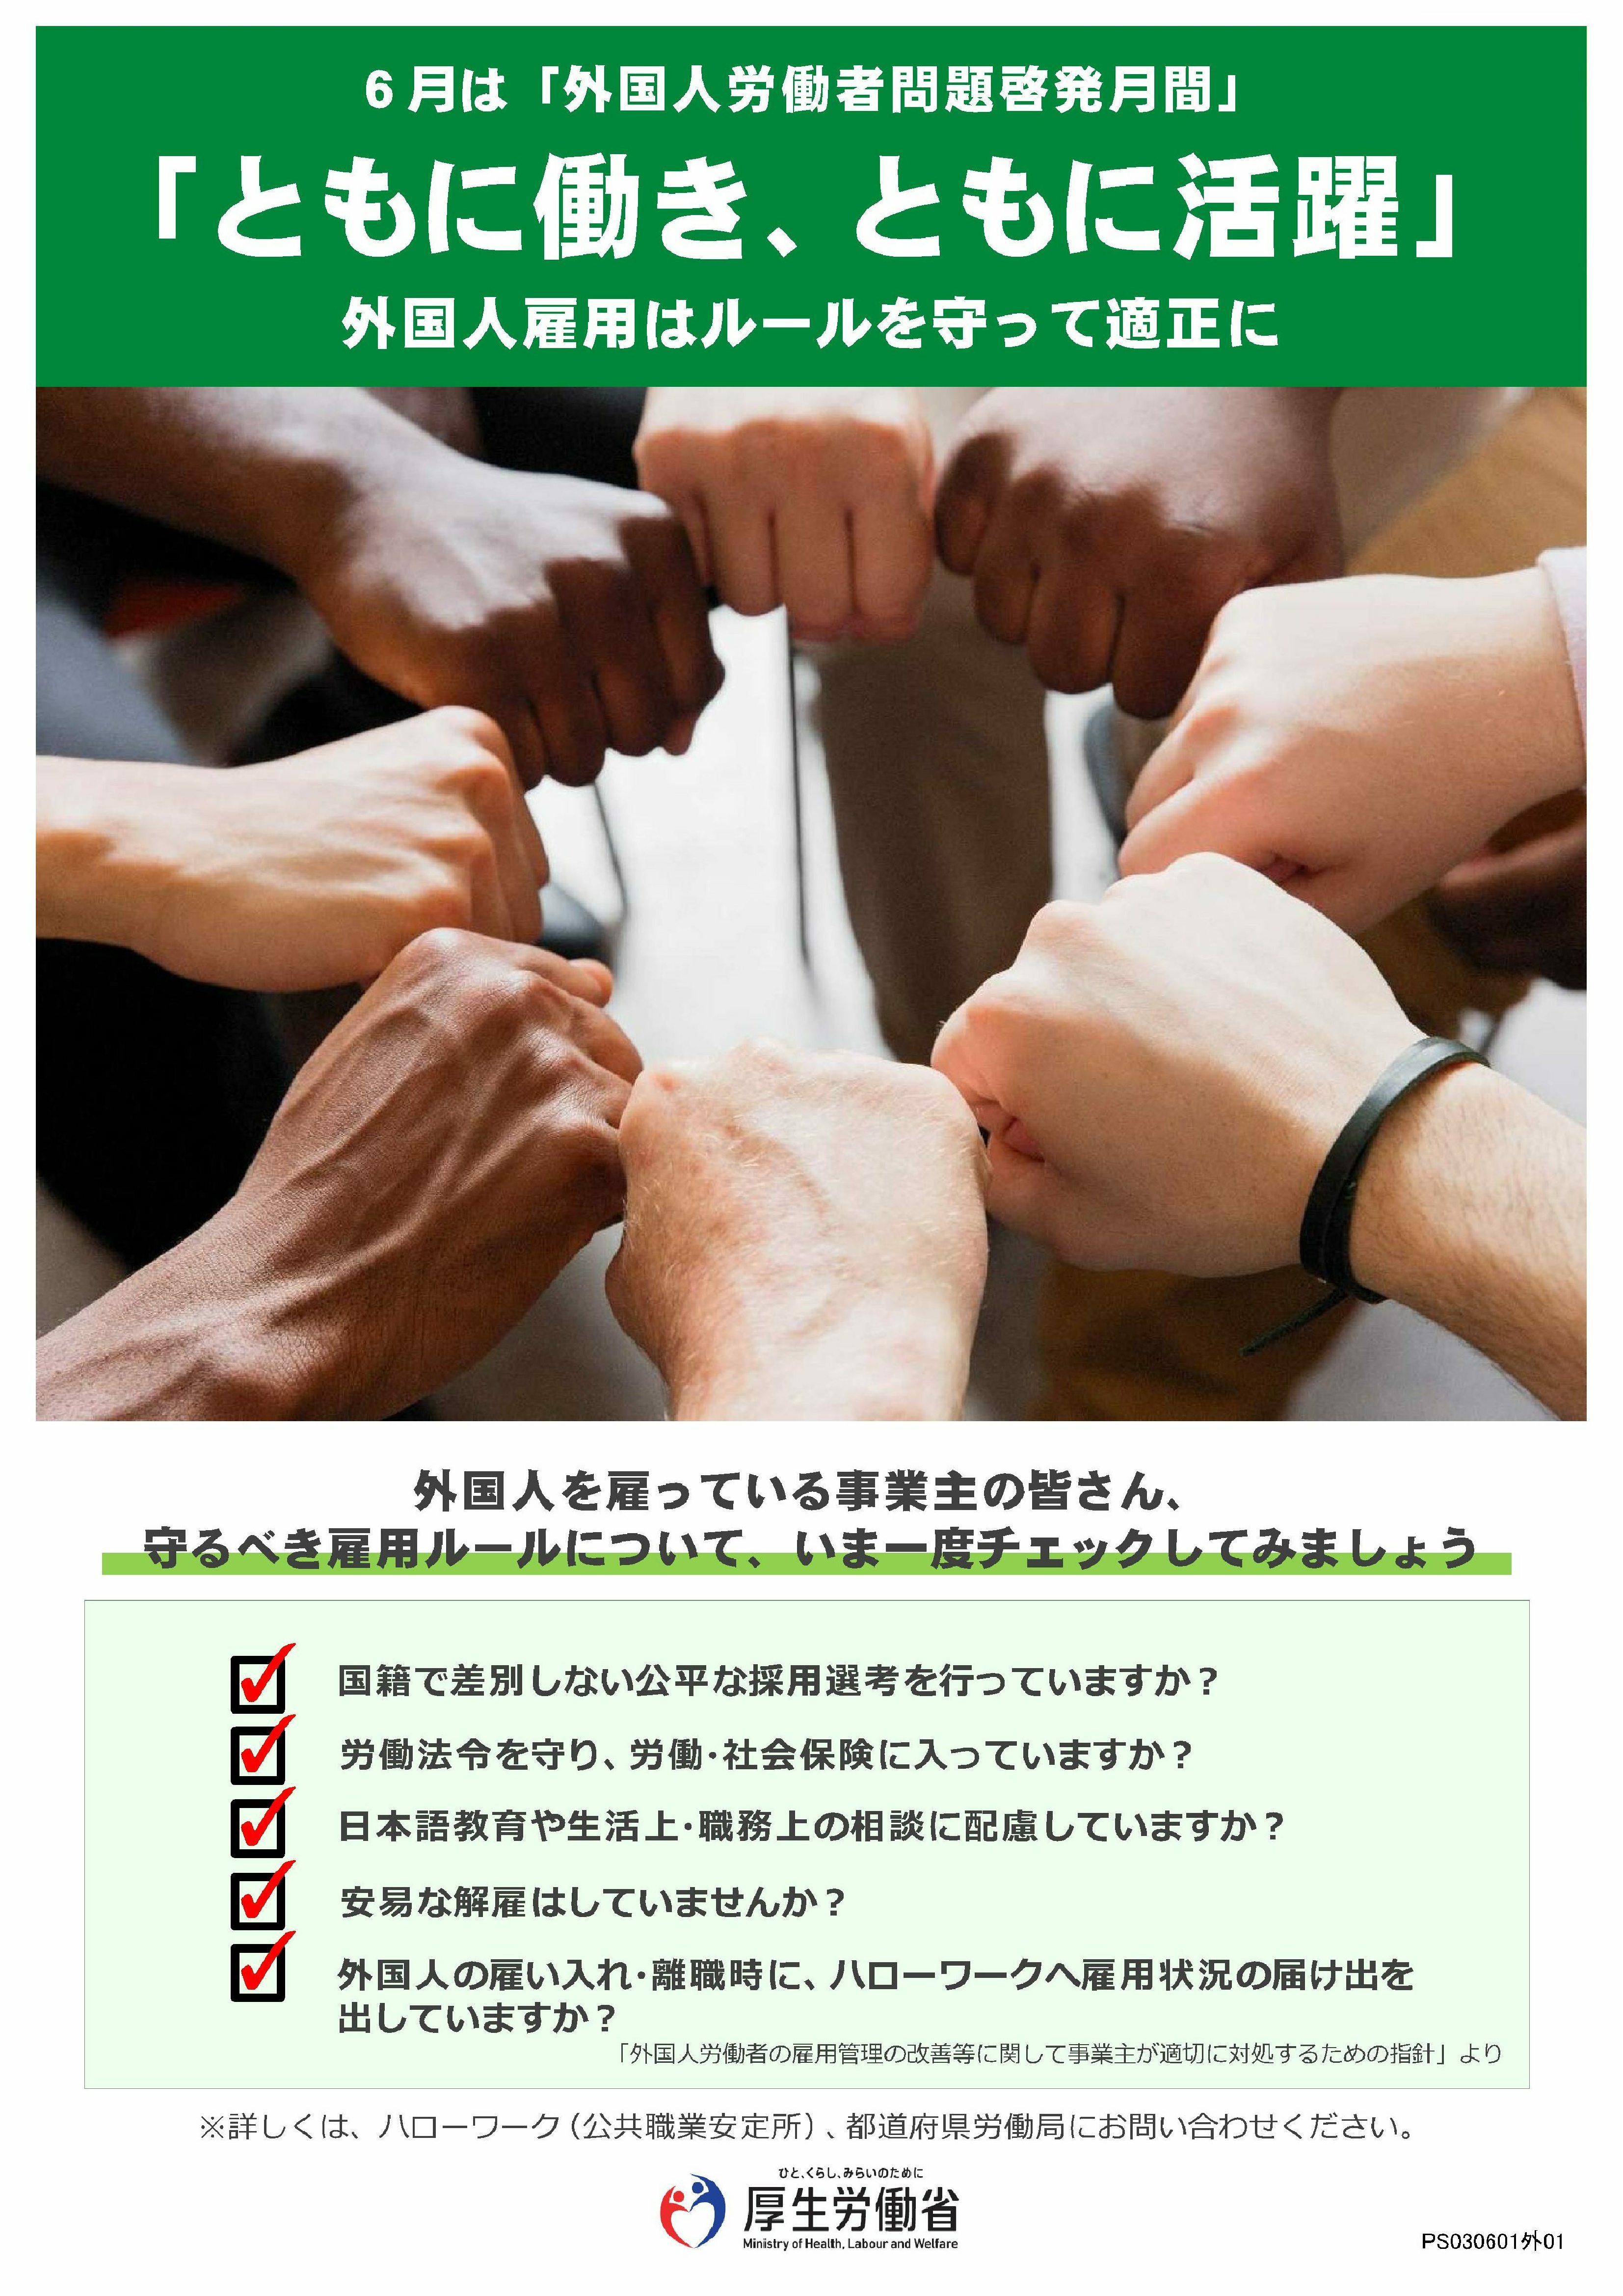 6月は 外国人労働者問題啓発月間 です 奈良労働局 奈良労働局